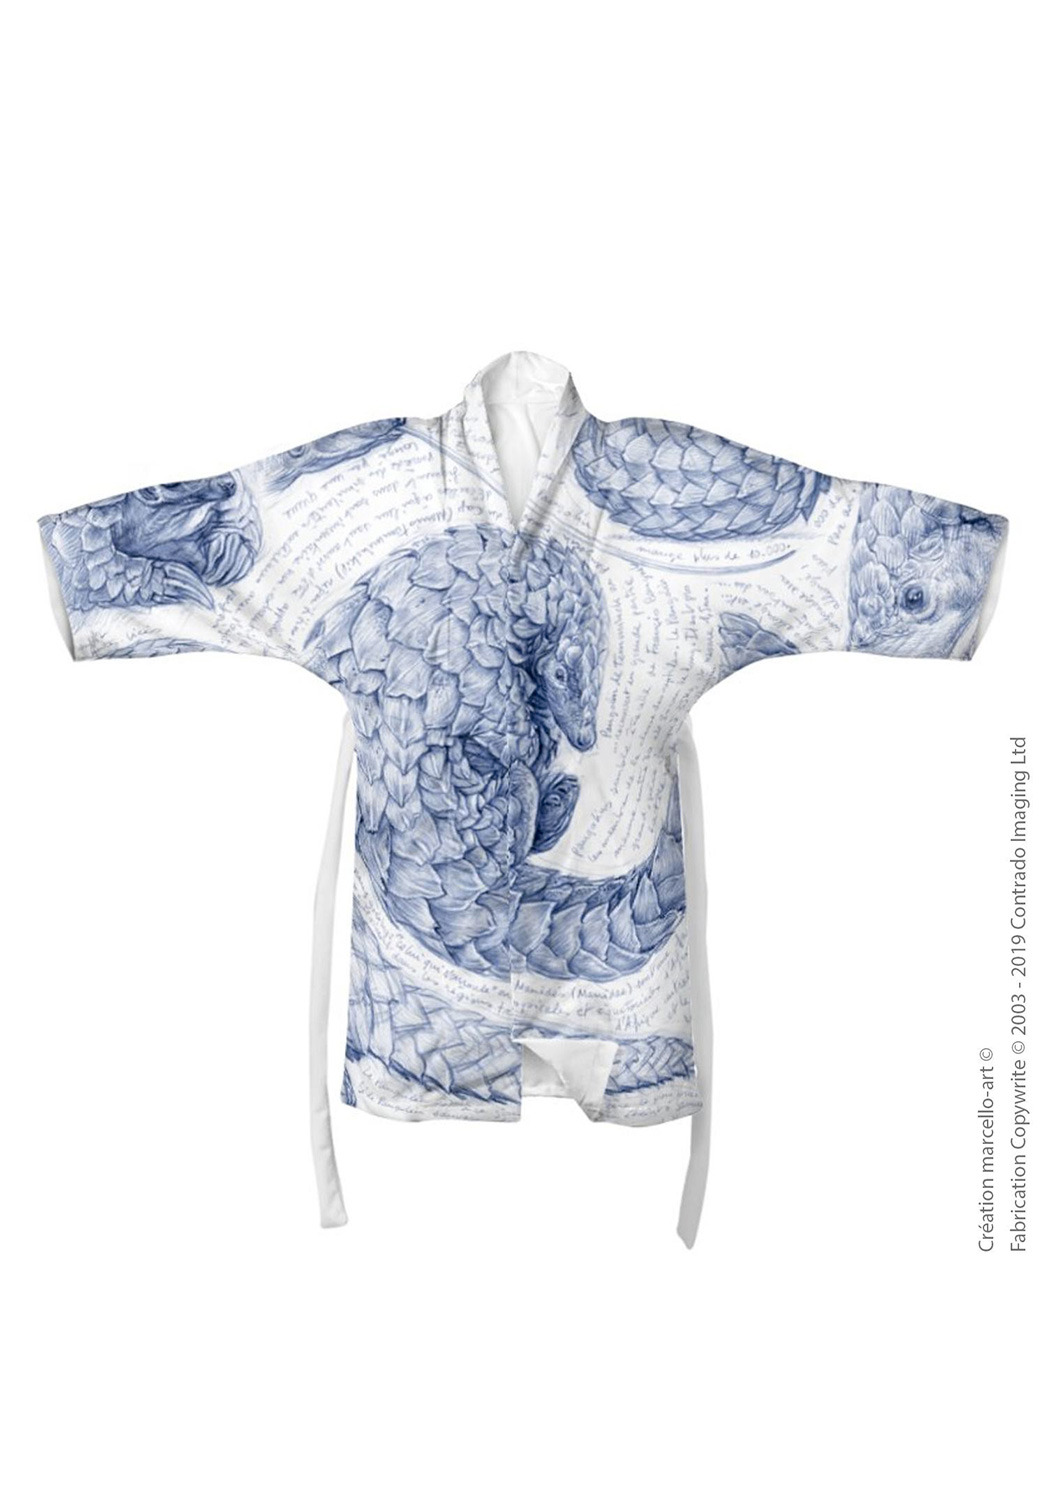 Marcello-art: Kimono Kimono 276 Pangolin